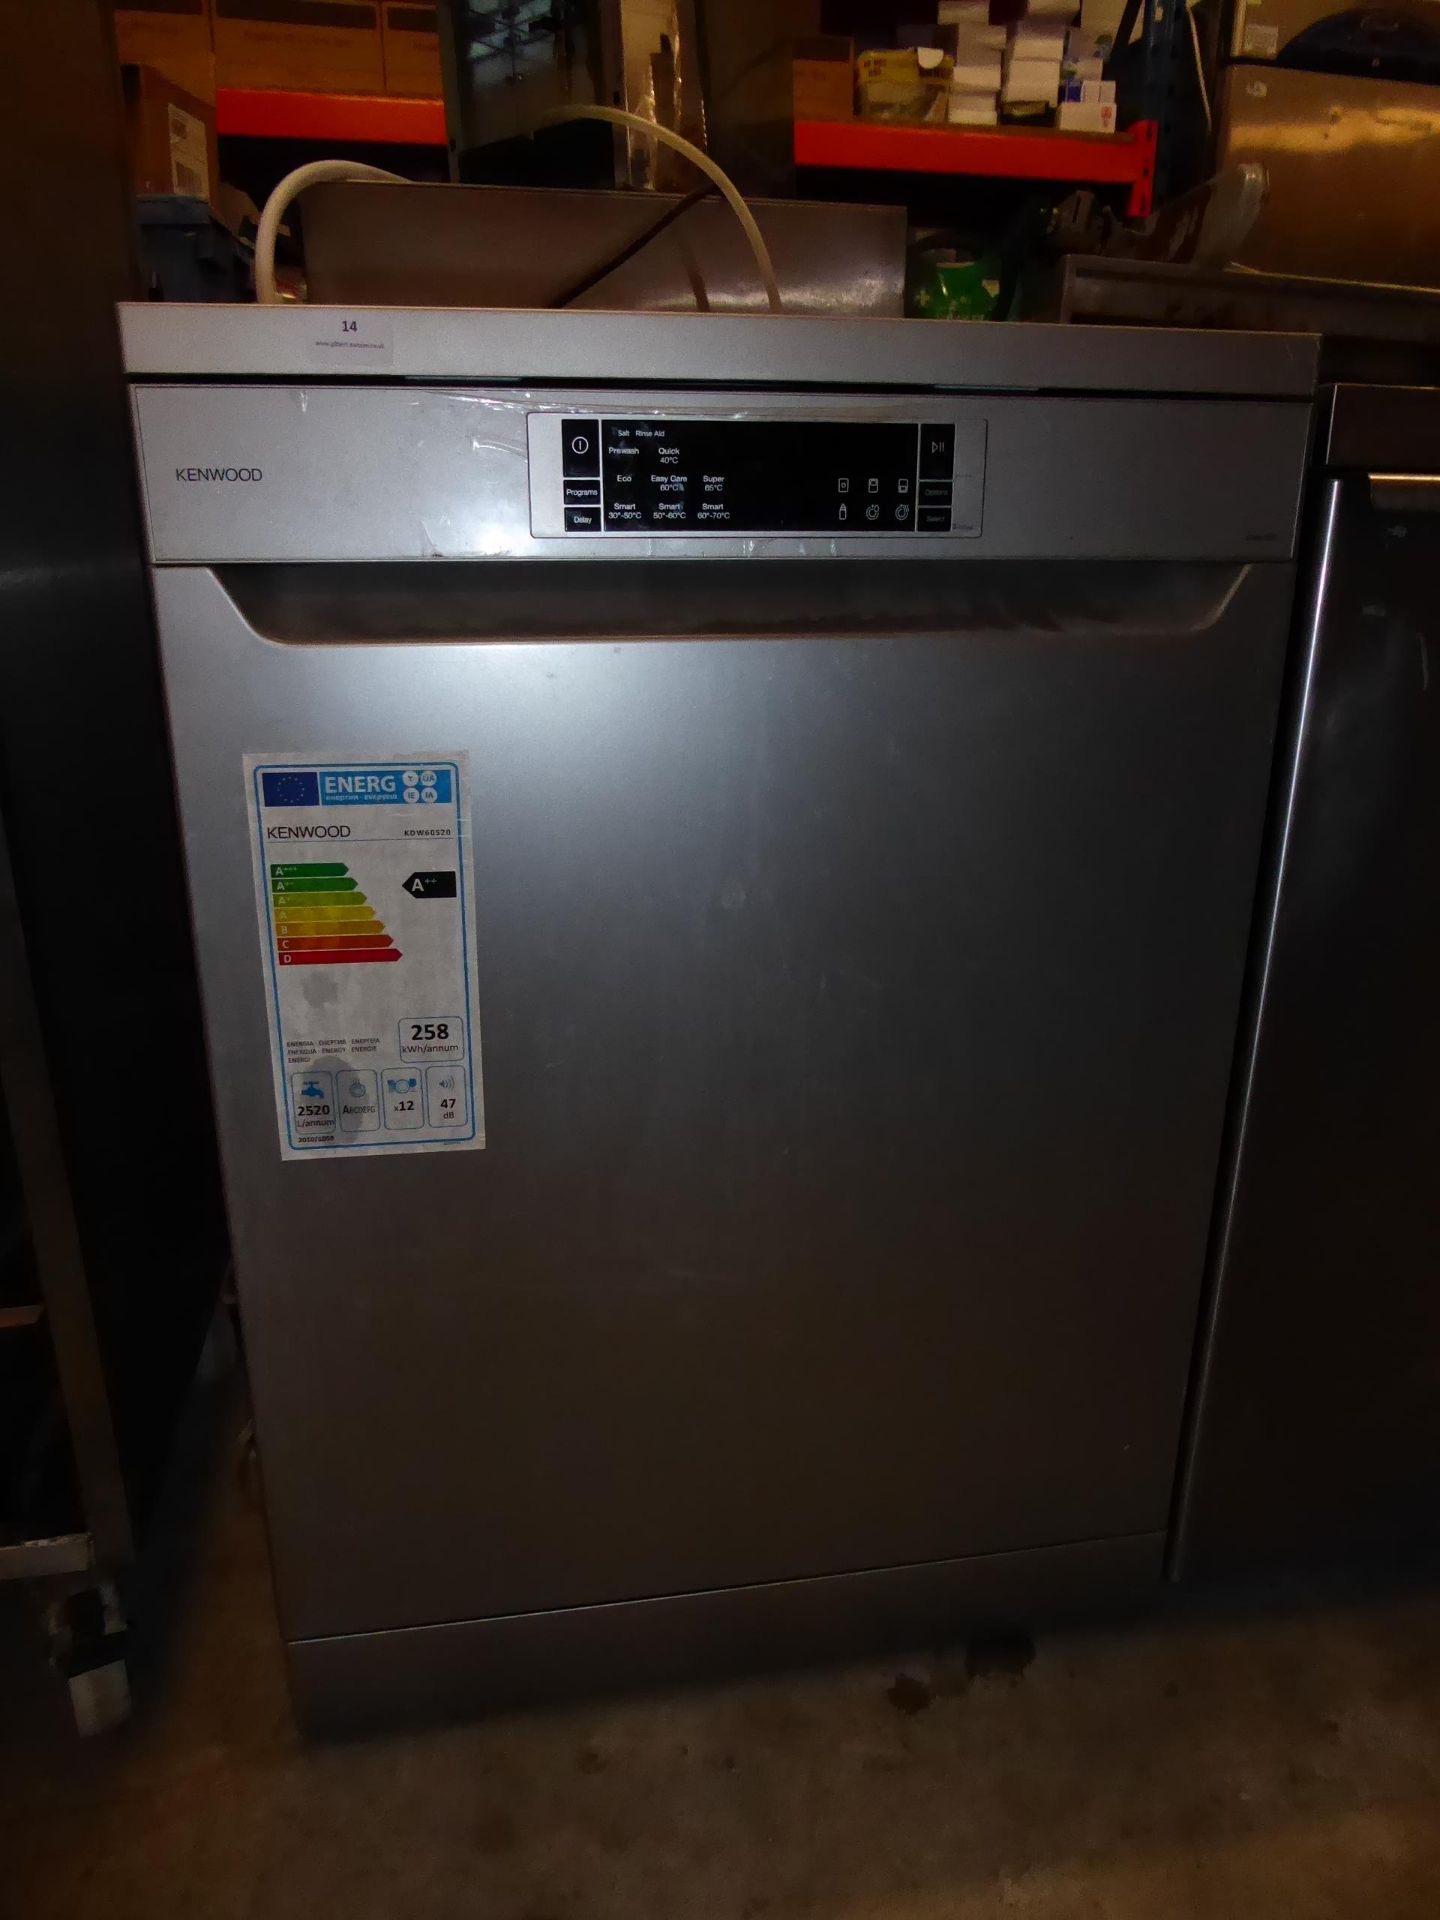 * Kenwood domestic dishwasher model kdw60 S20